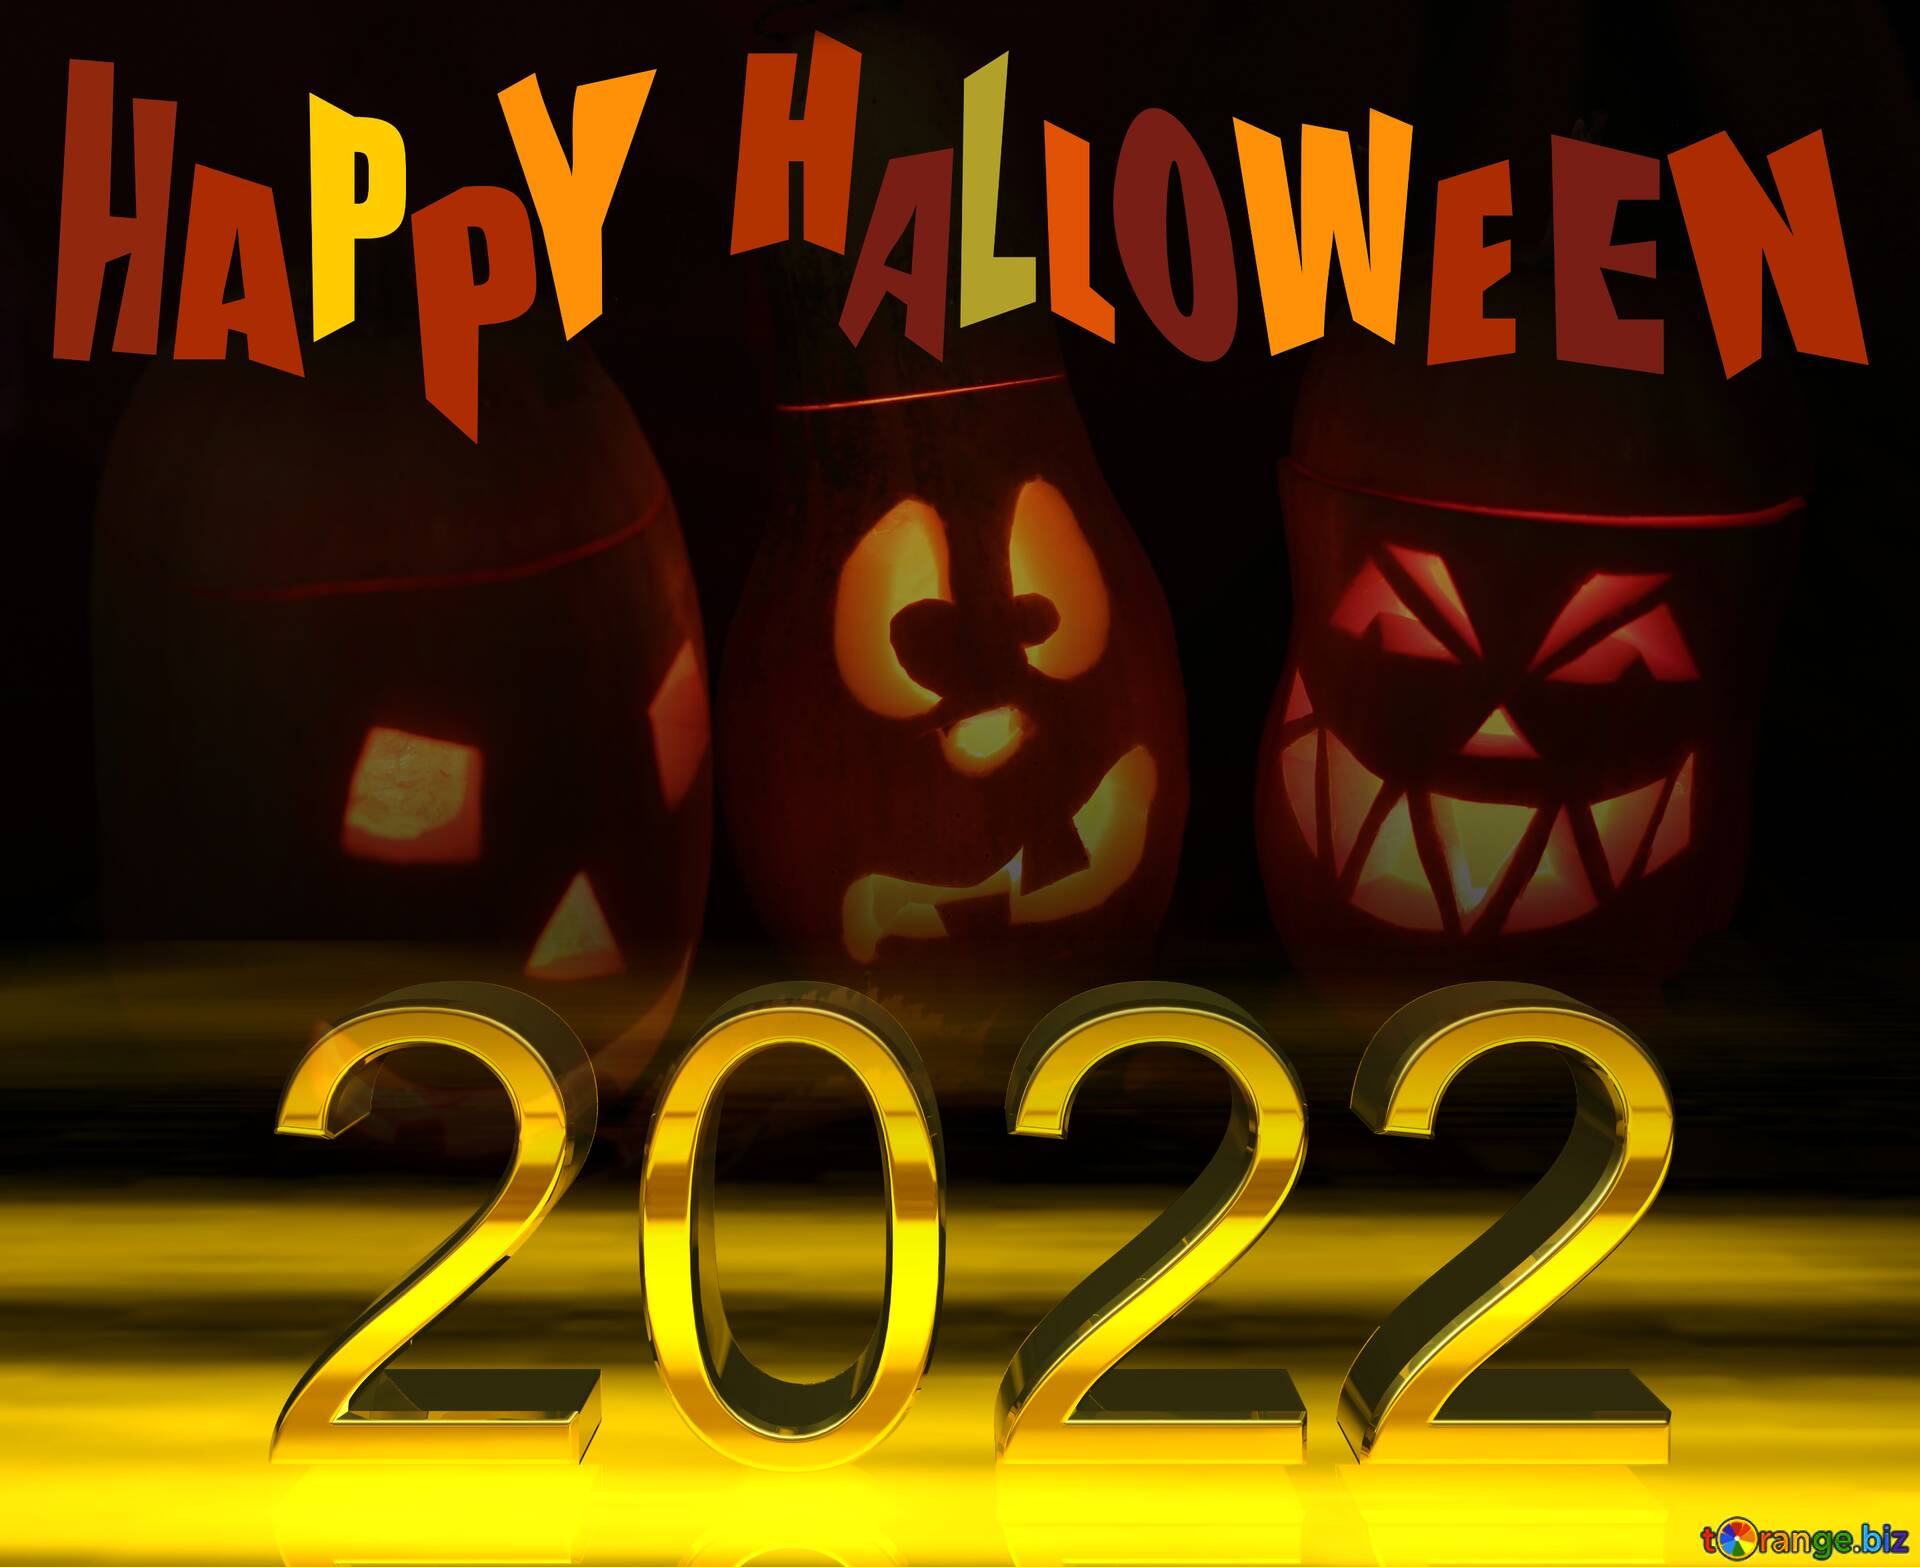 escape halloween 2021 schedule